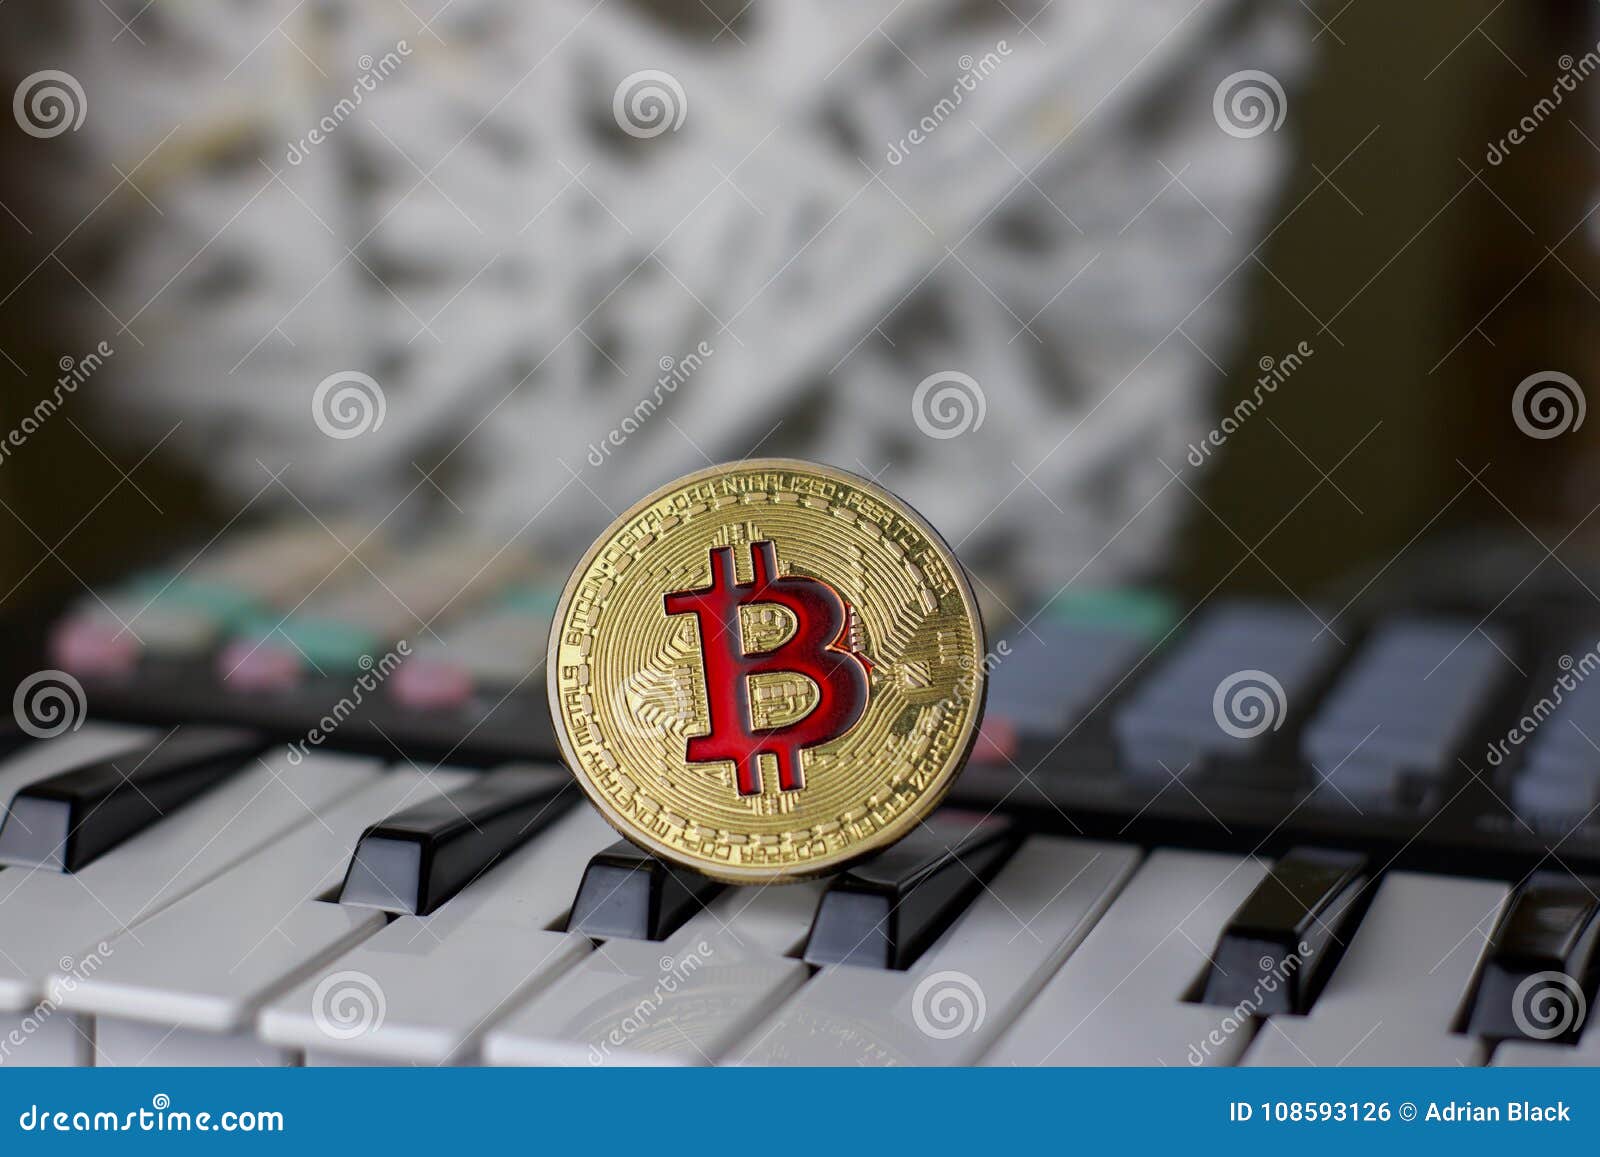 trading bot btc- e obțineți bitcoin cu paypal